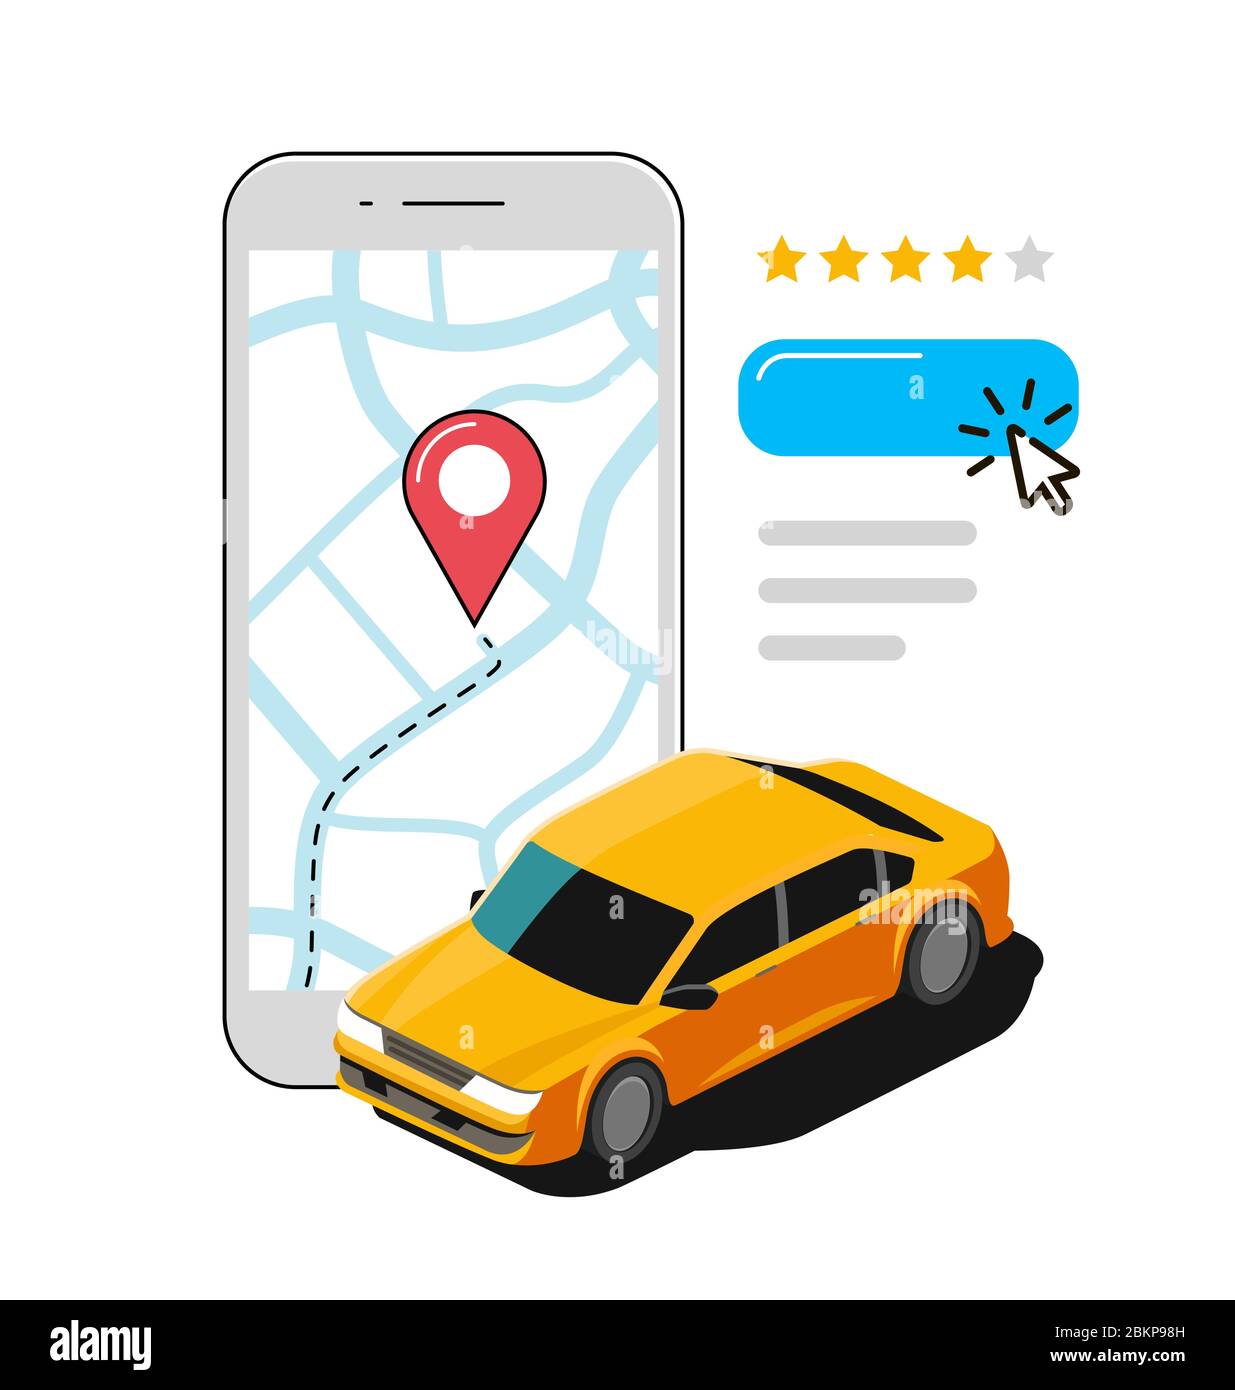 Taxi call using mobile application. Transportation vector illustration Stock Vector